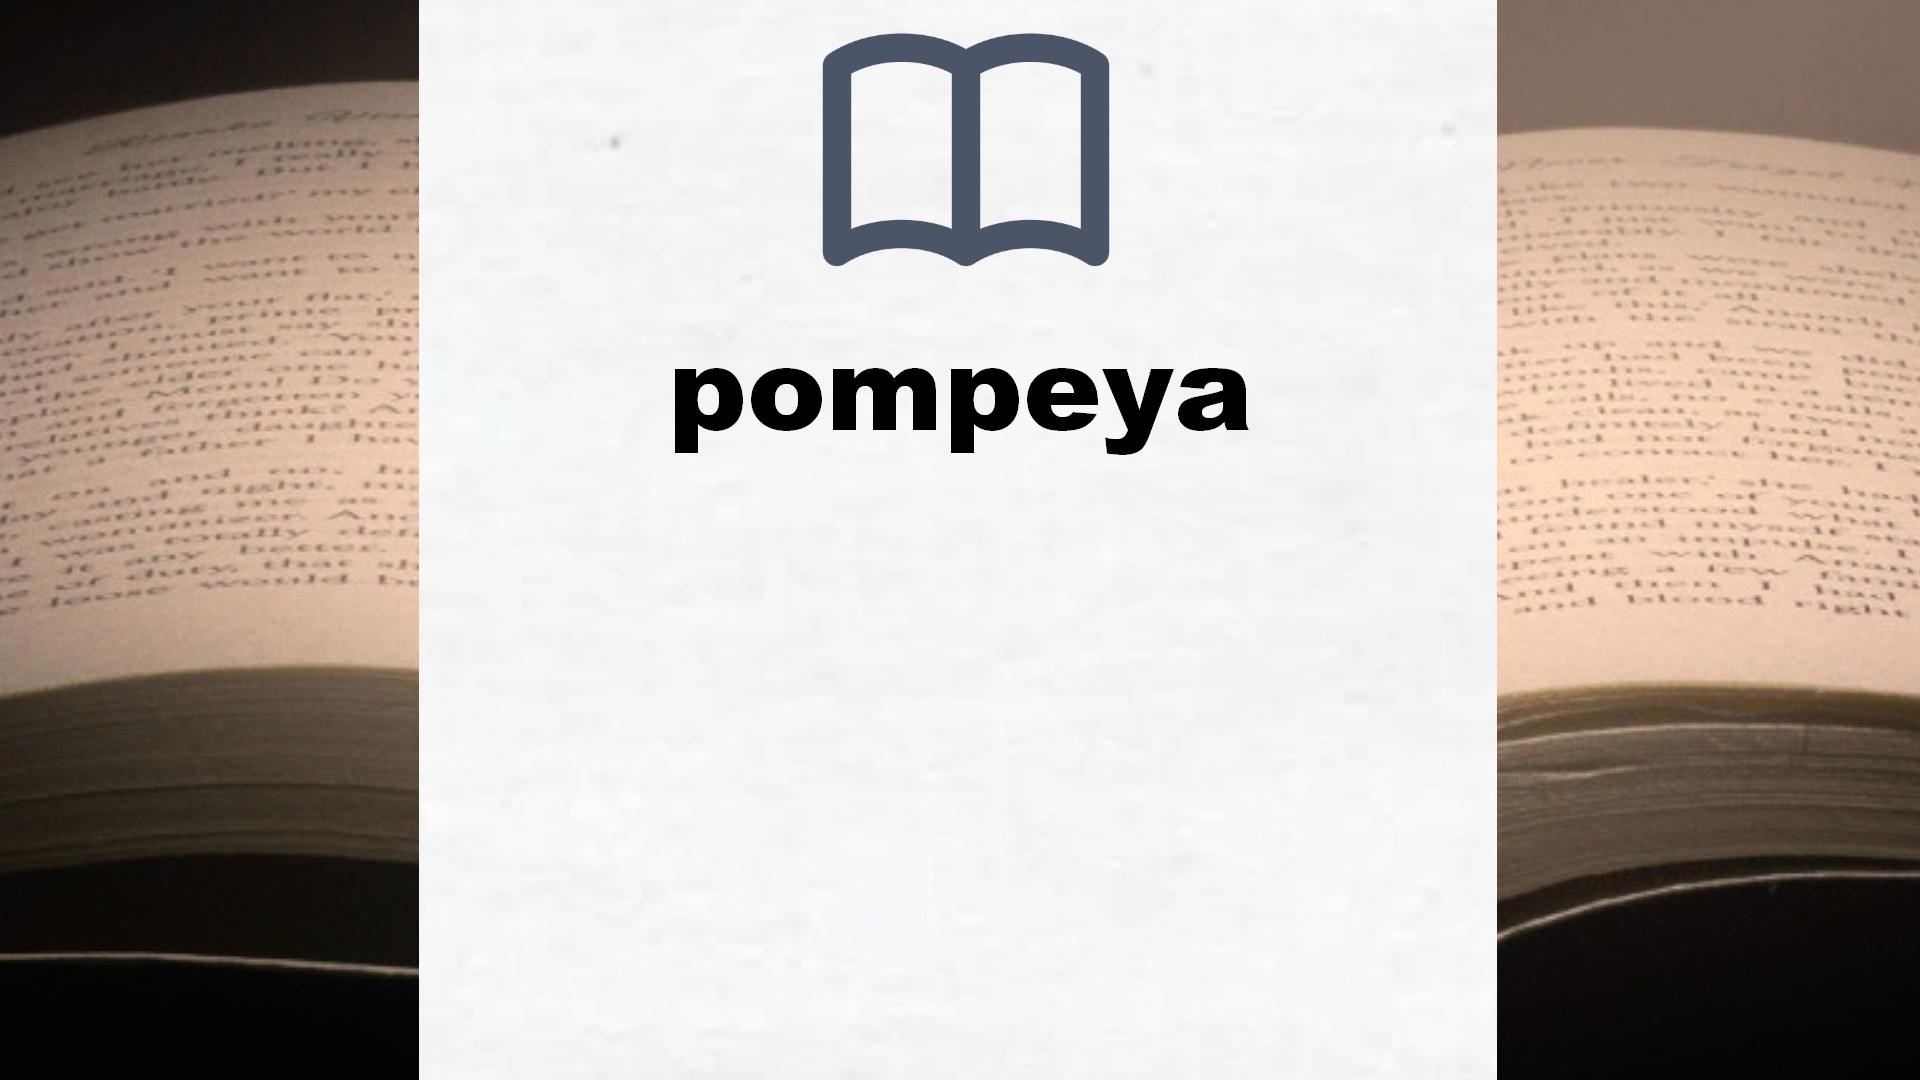 Libros sobre pompeya